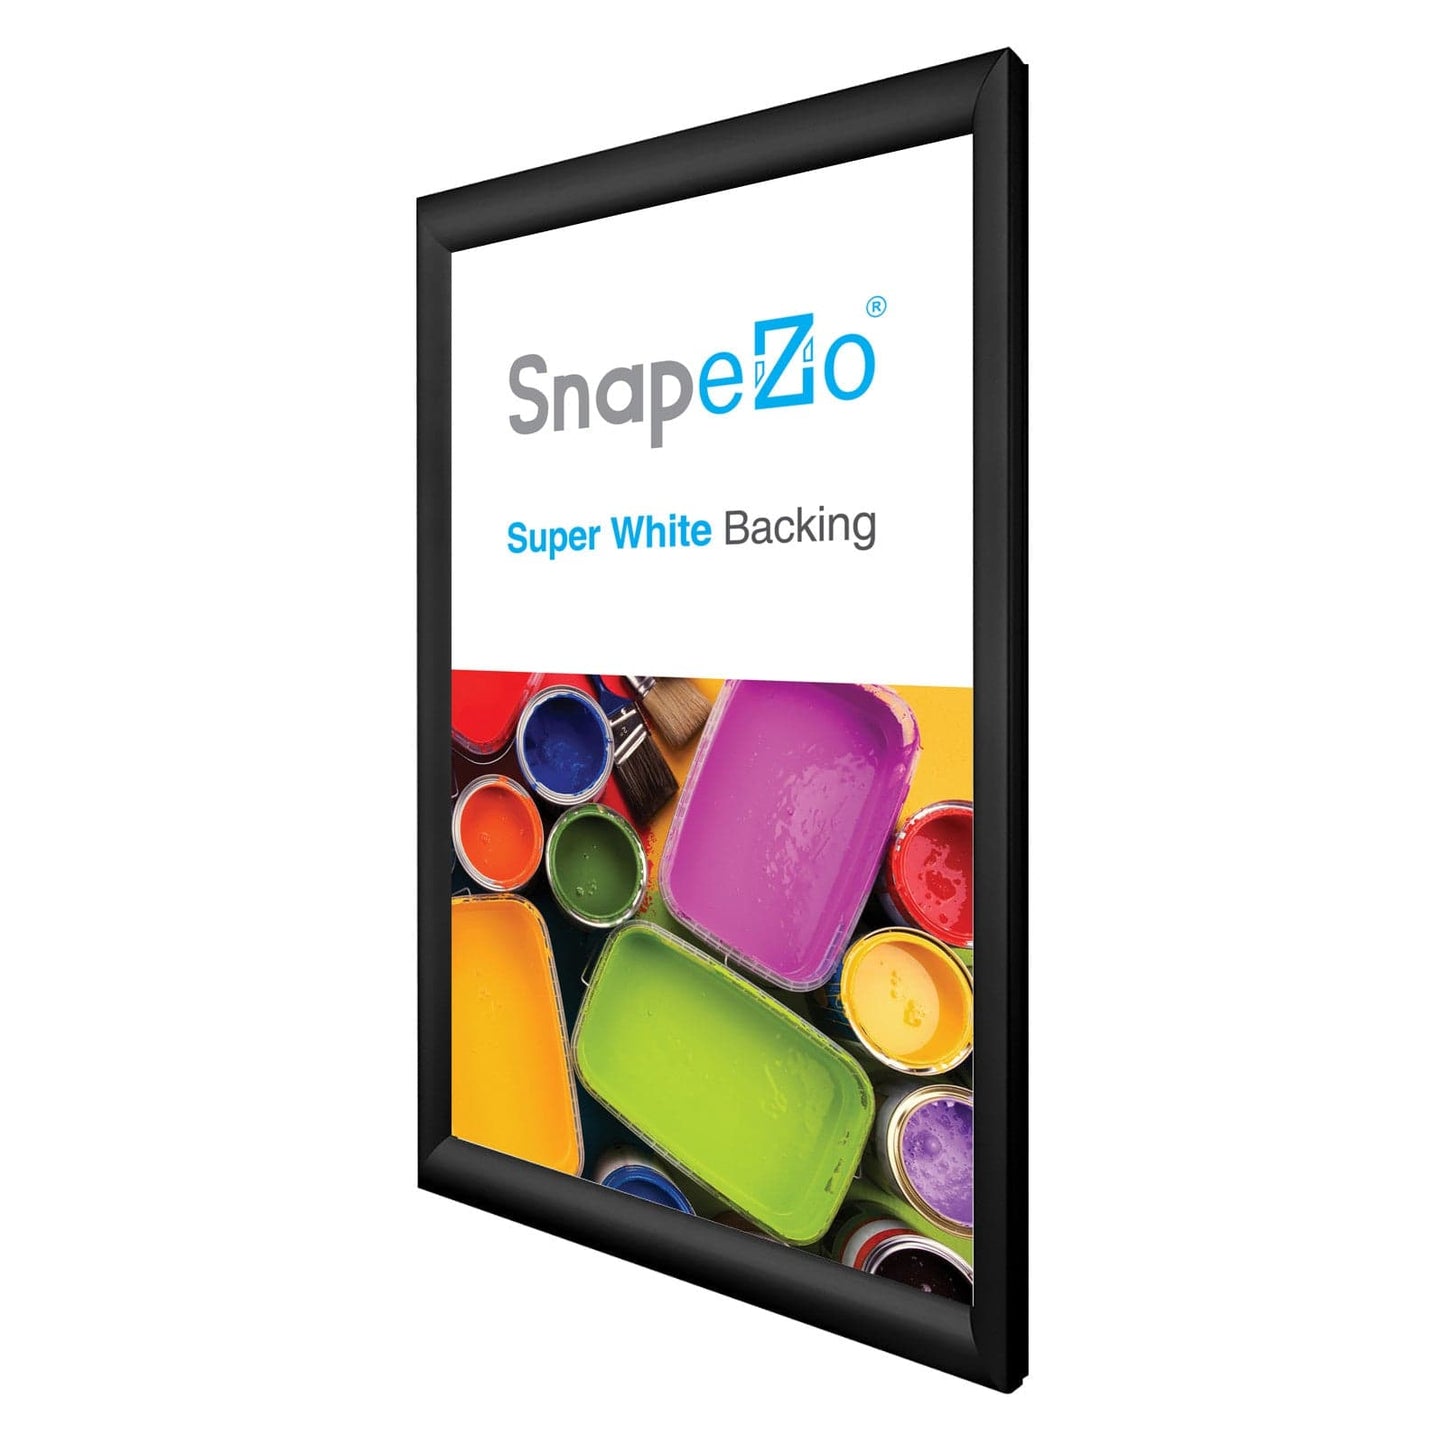 12x20 Black SnapeZo® Snap Frame - 1.2" Profile - Snap Frames Direct